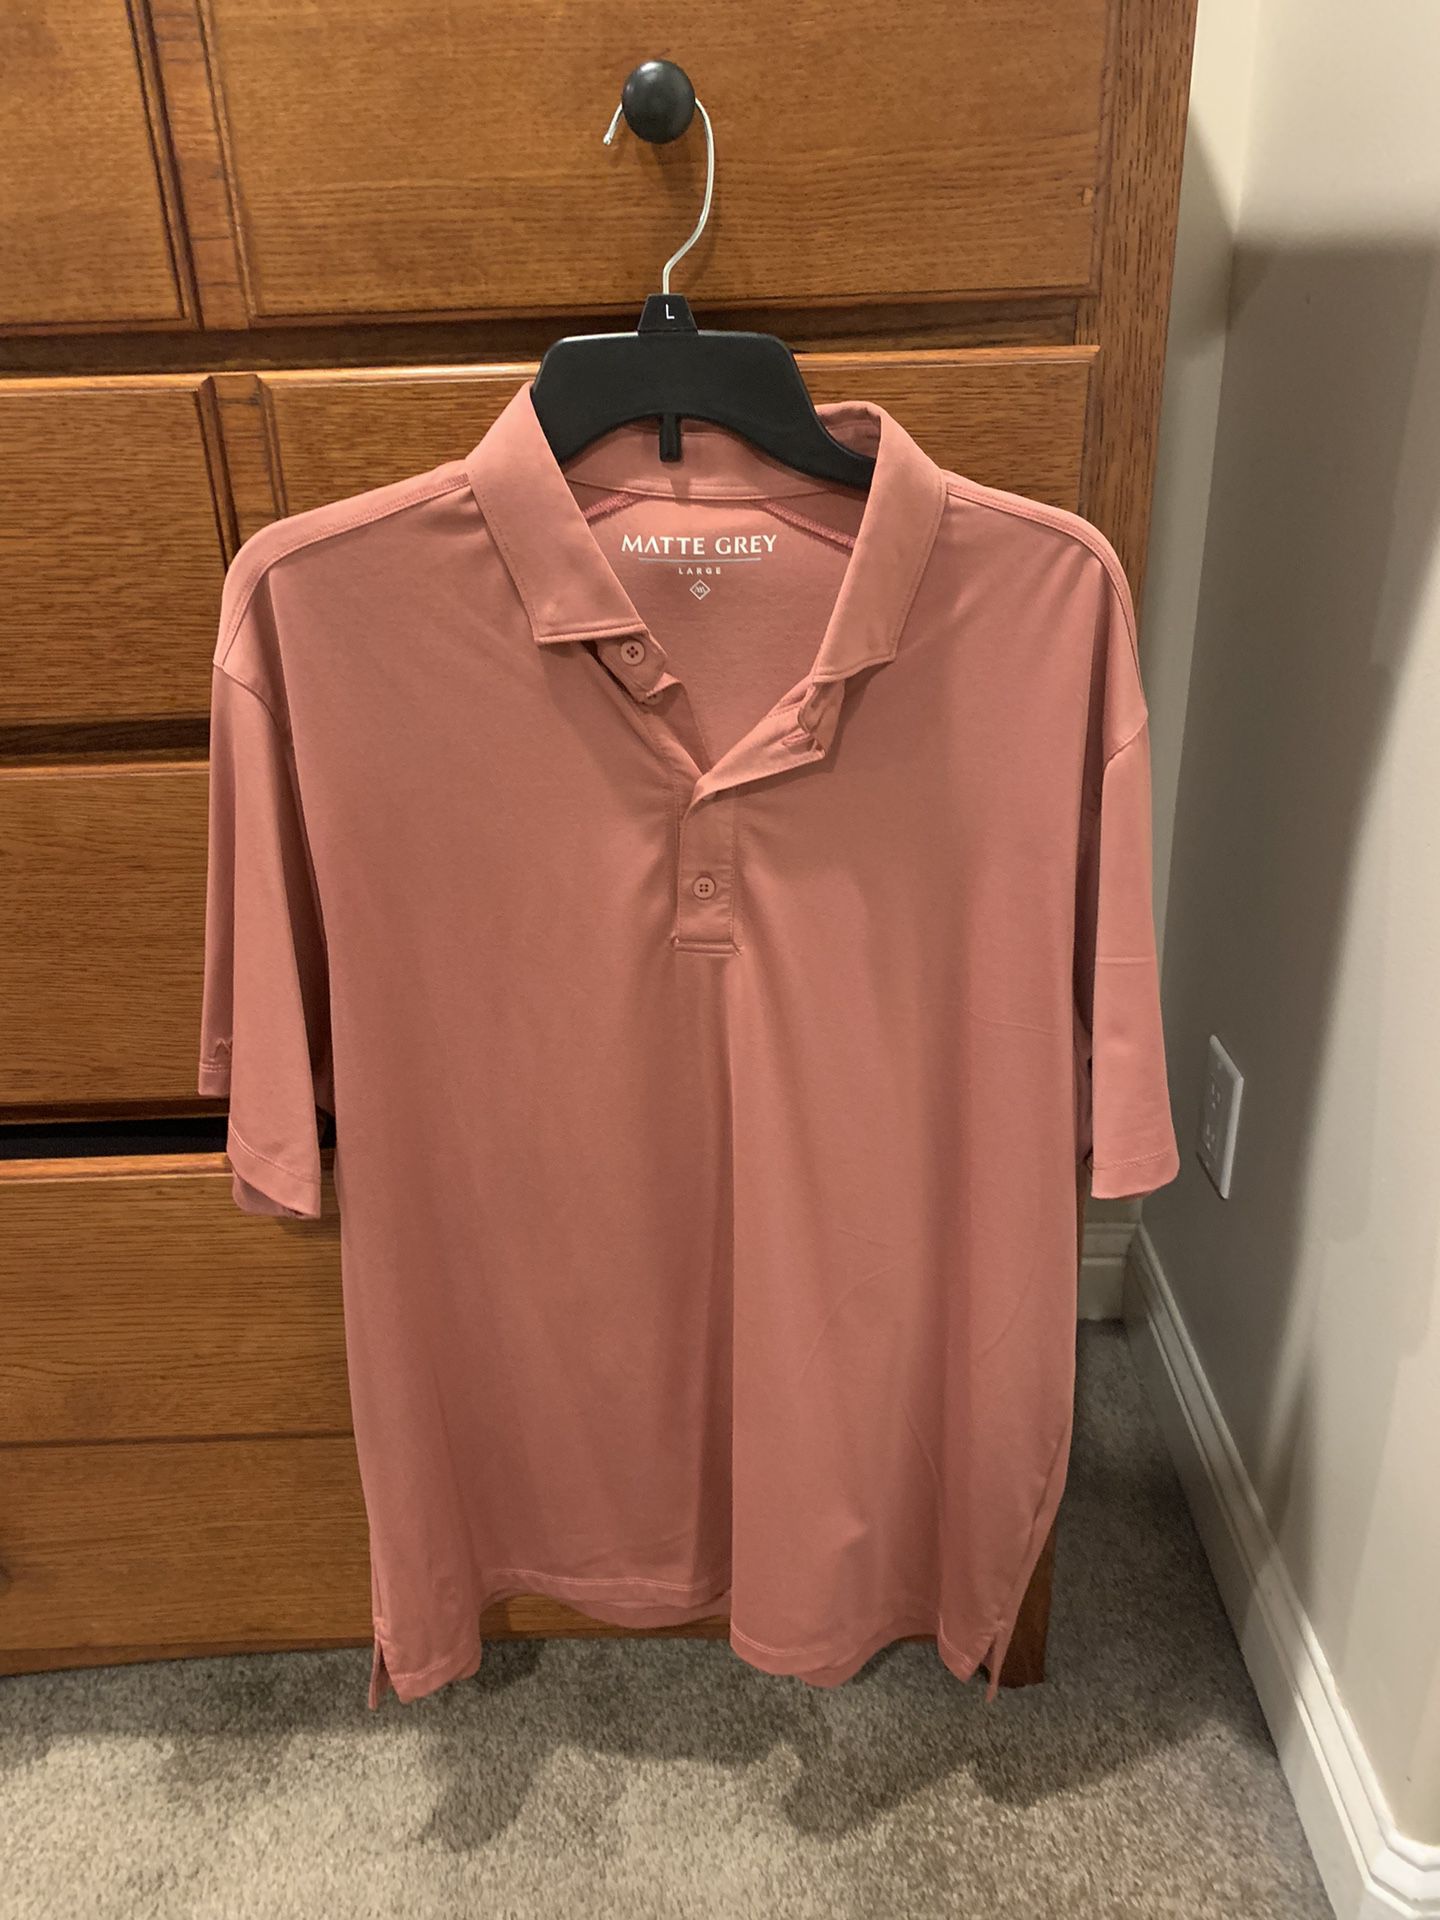 Matte Grey Golf Polo Shirt